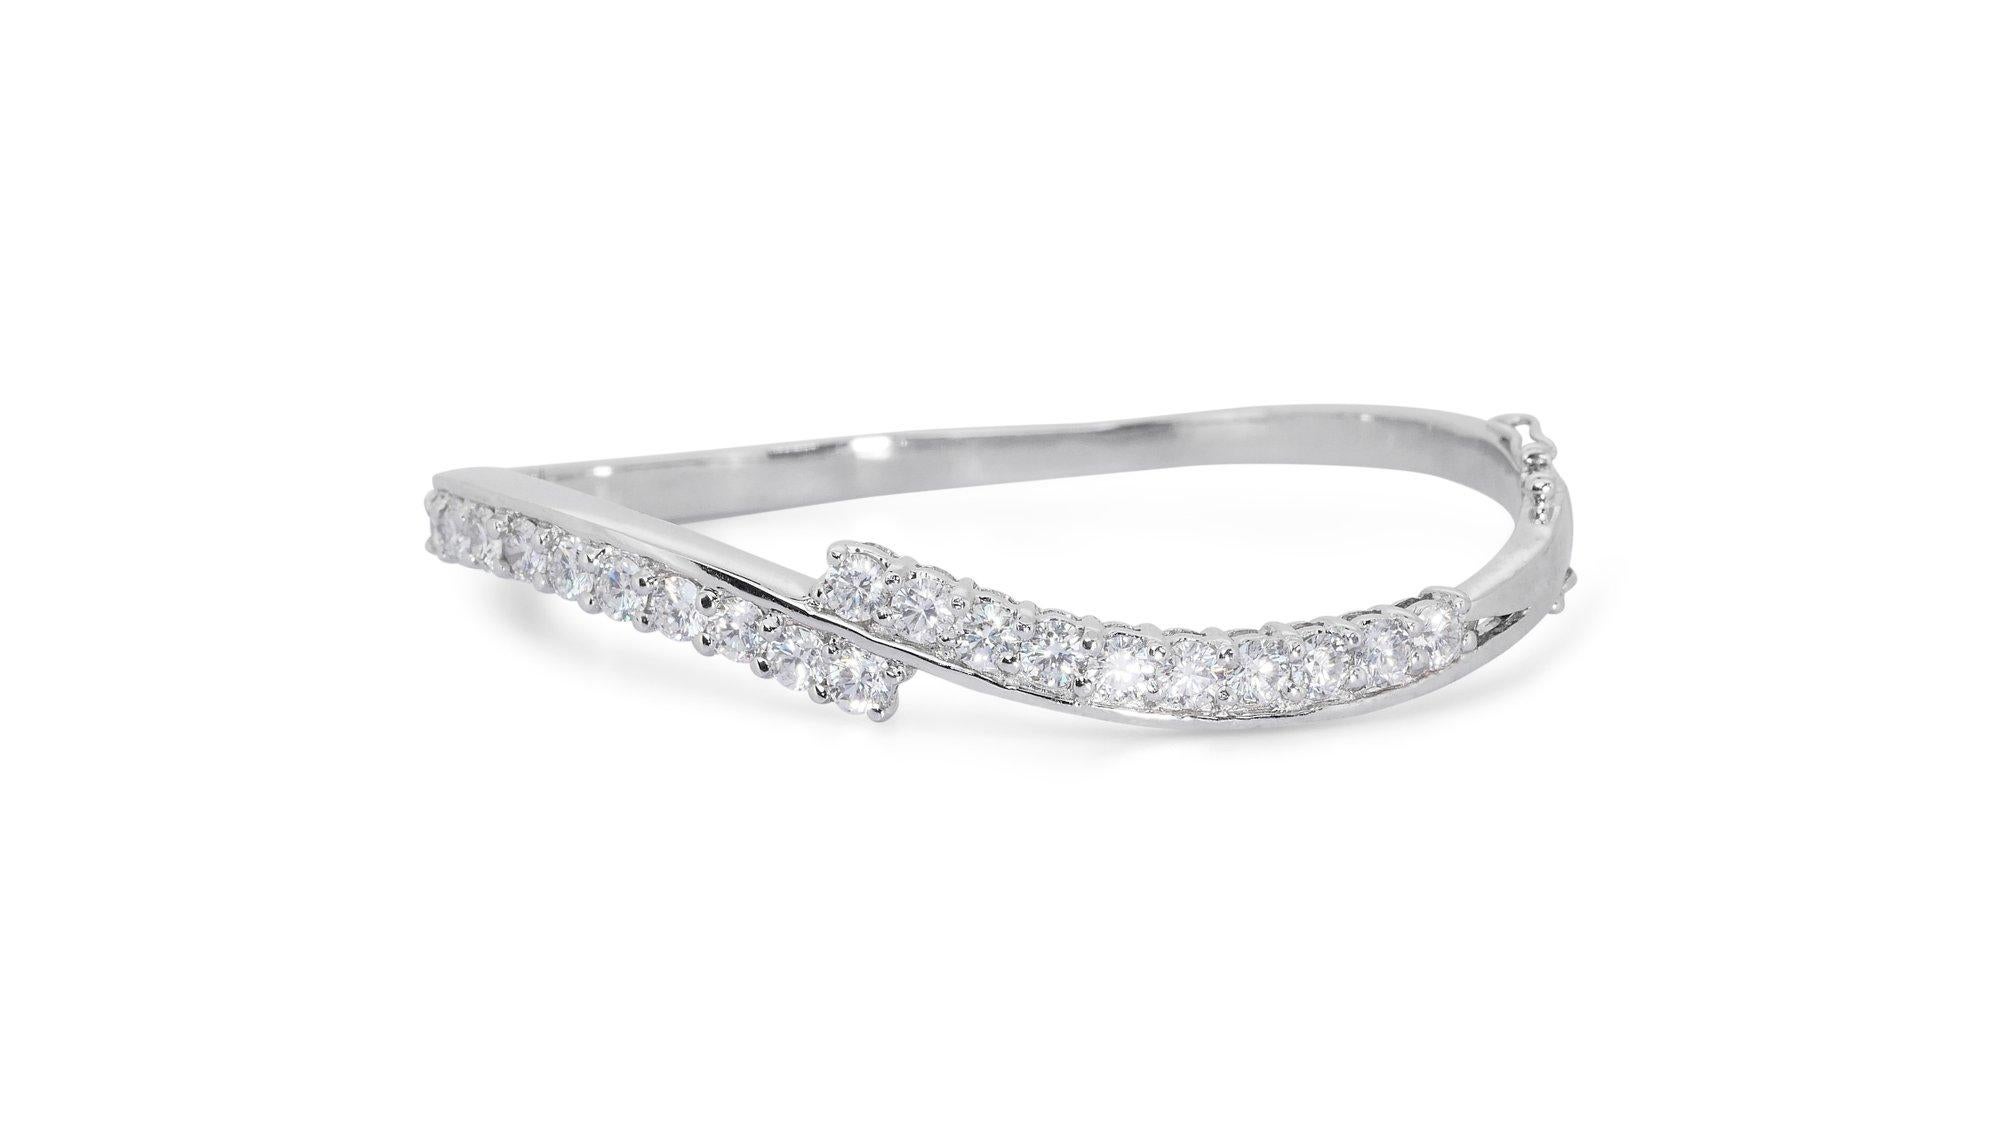 Women's Dazzling 18k White Gold Bangle w/ 2.8 Carat Natural Diamonds IGI Certificate For Sale